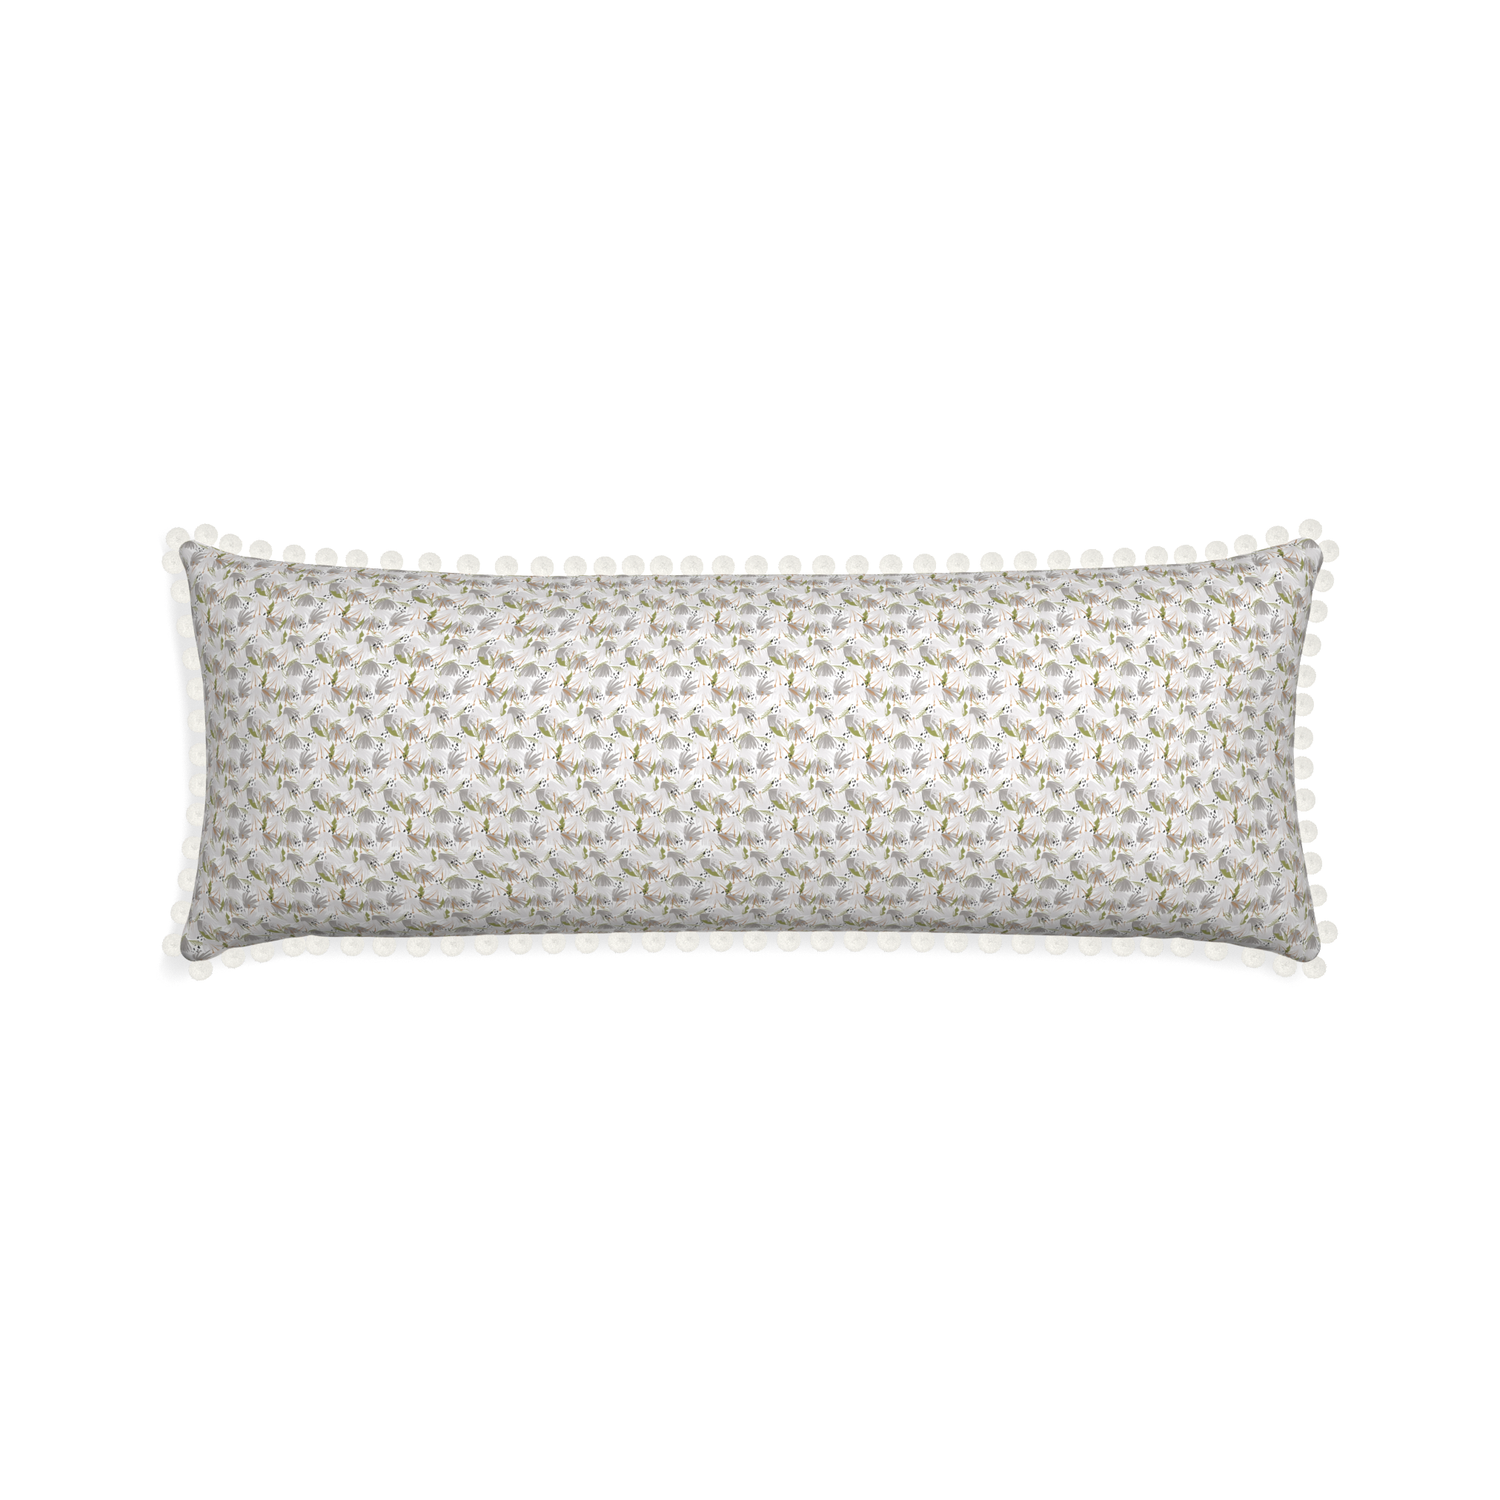 Xl-lumbar eden grey custom pillow with snow pom pom on white background